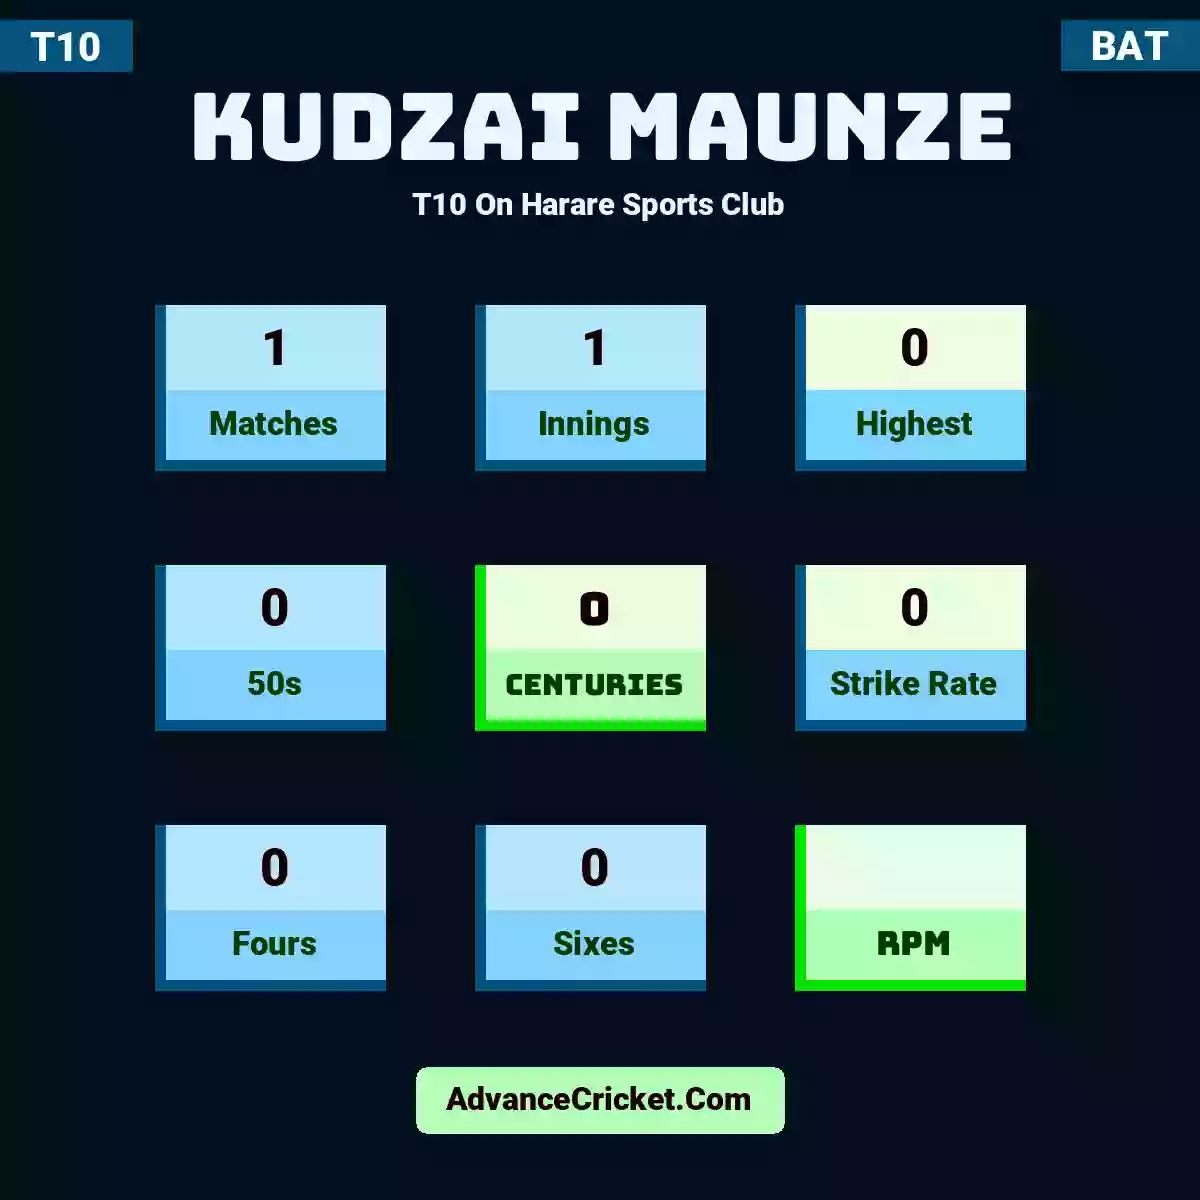 Kudzai Maunze T10  On Harare Sports Club, Kudzai Maunze played 1 matches, scored 0 runs as highest, 0 half-centuries, and 0 centuries, with a strike rate of 0. K.Maunze hit 0 fours and 0 sixes.